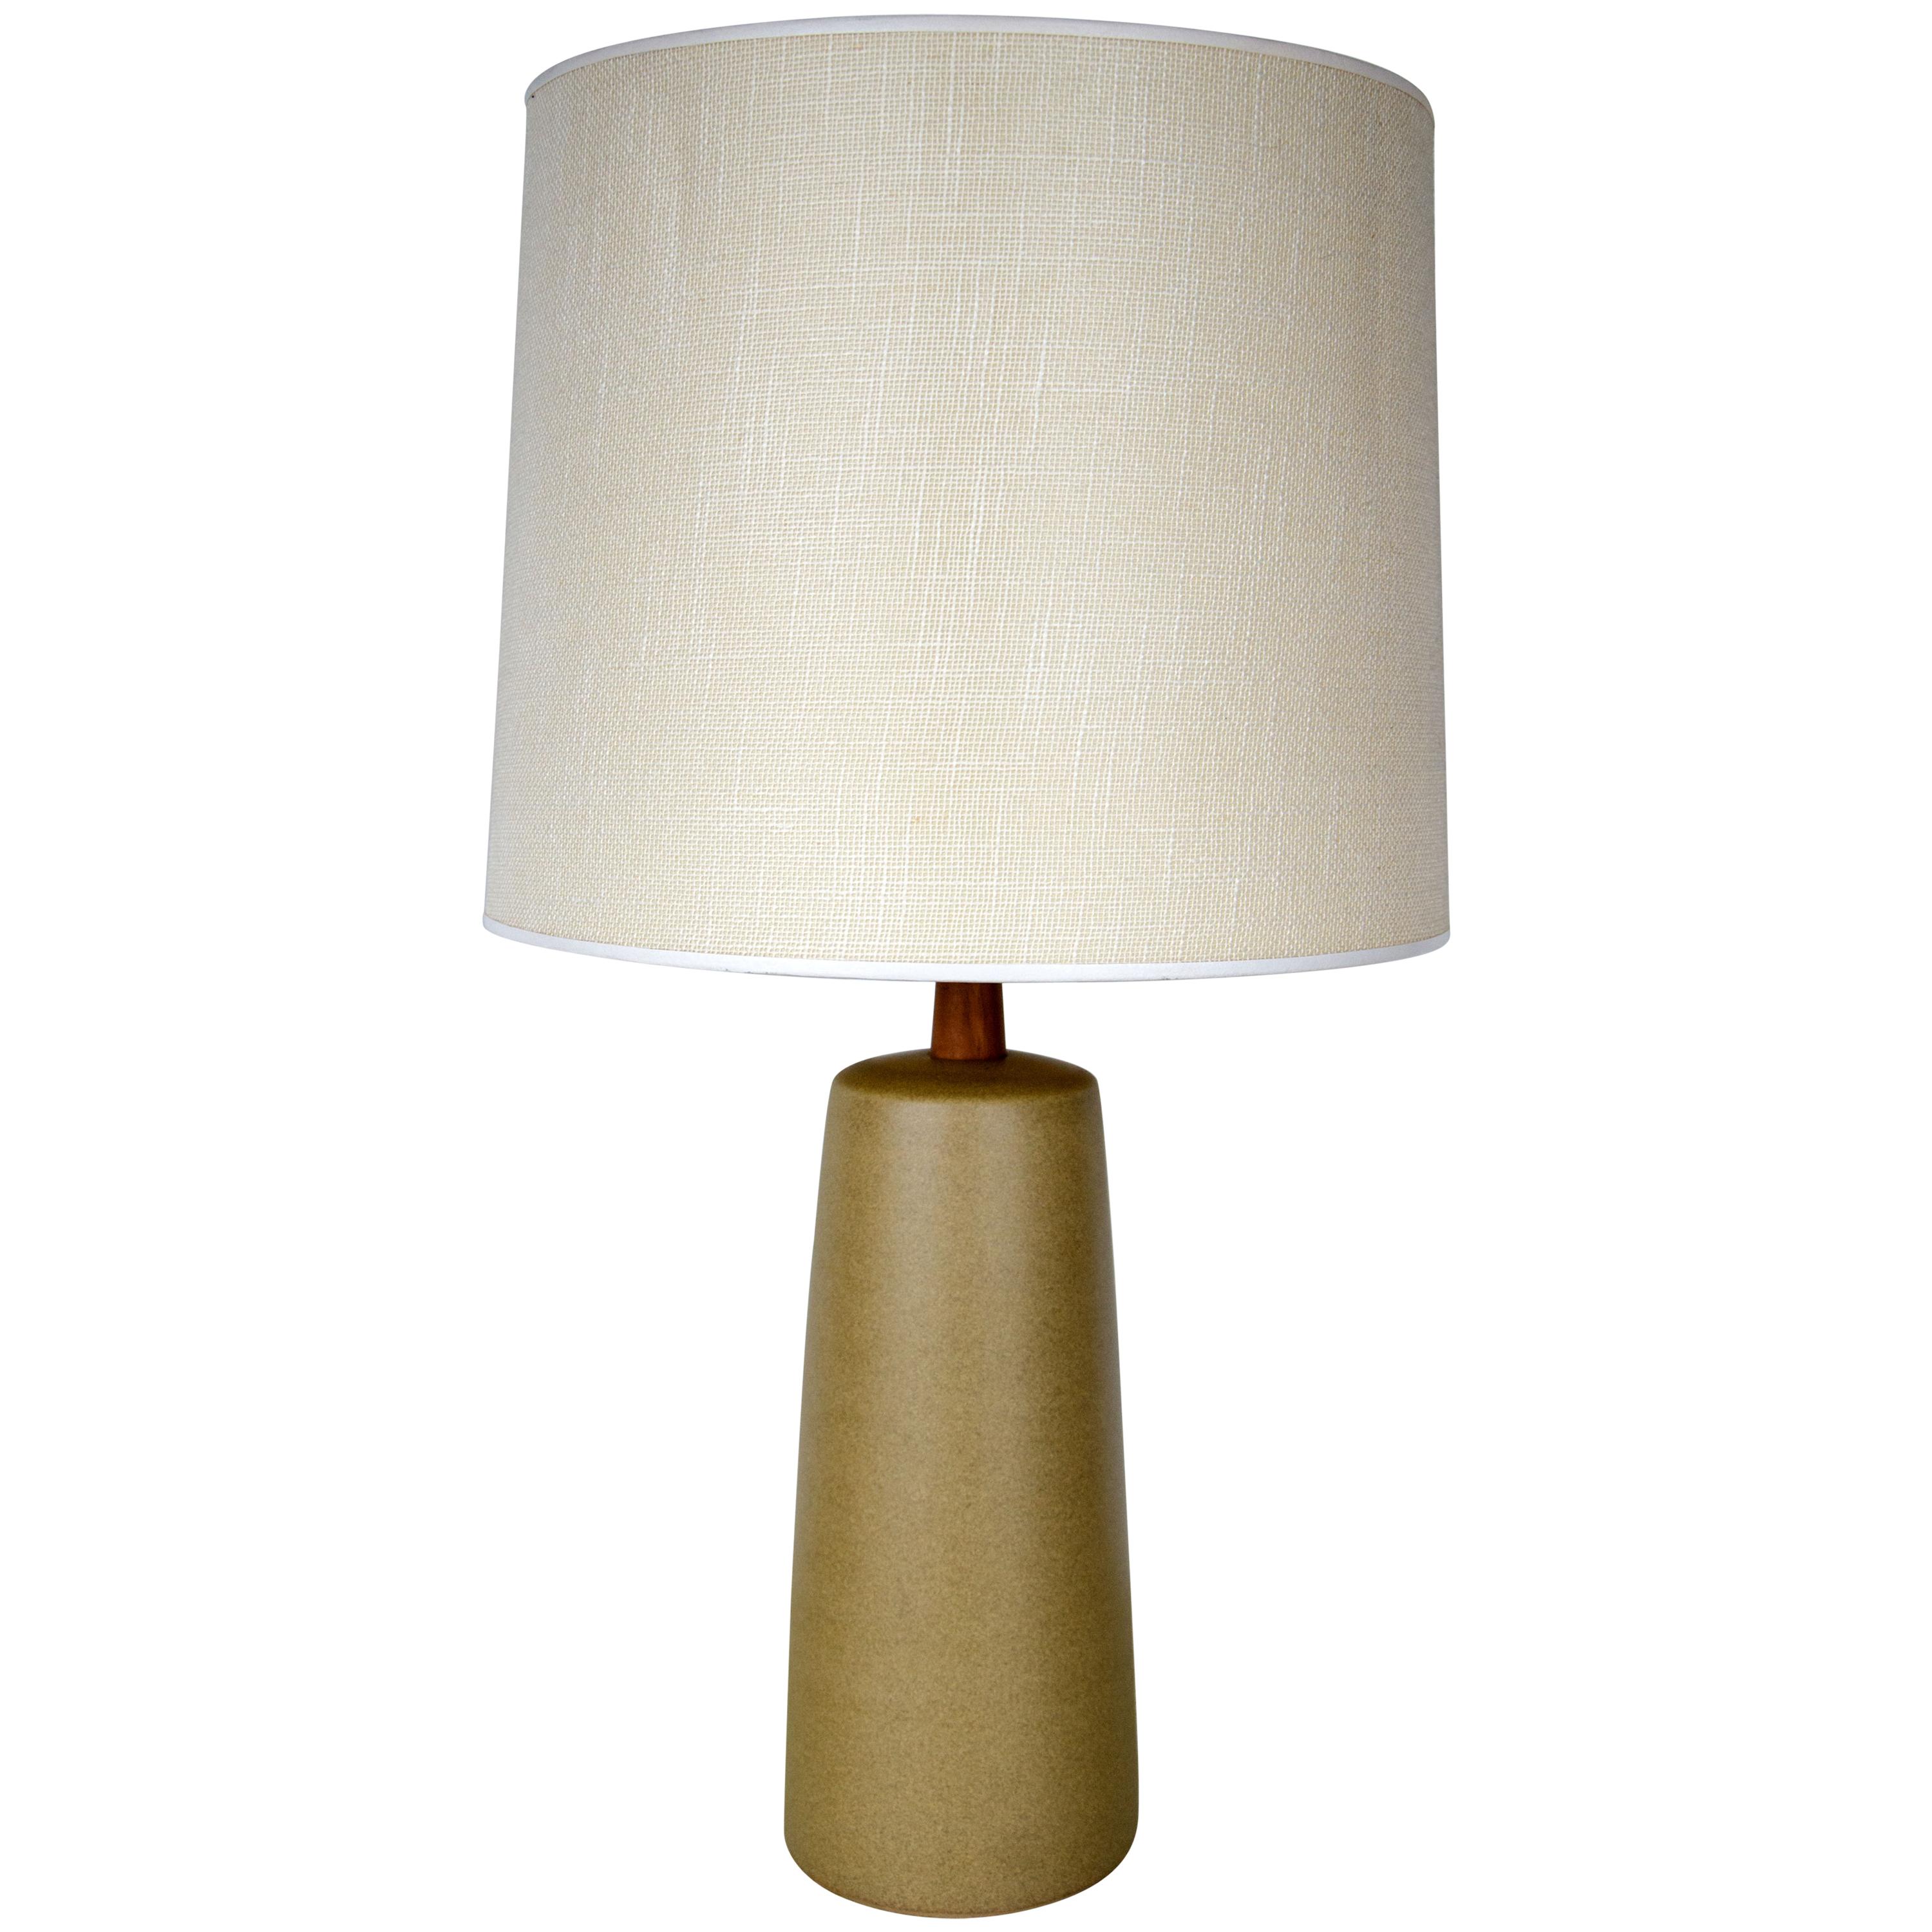 Martz Table Lamp, Original Shade